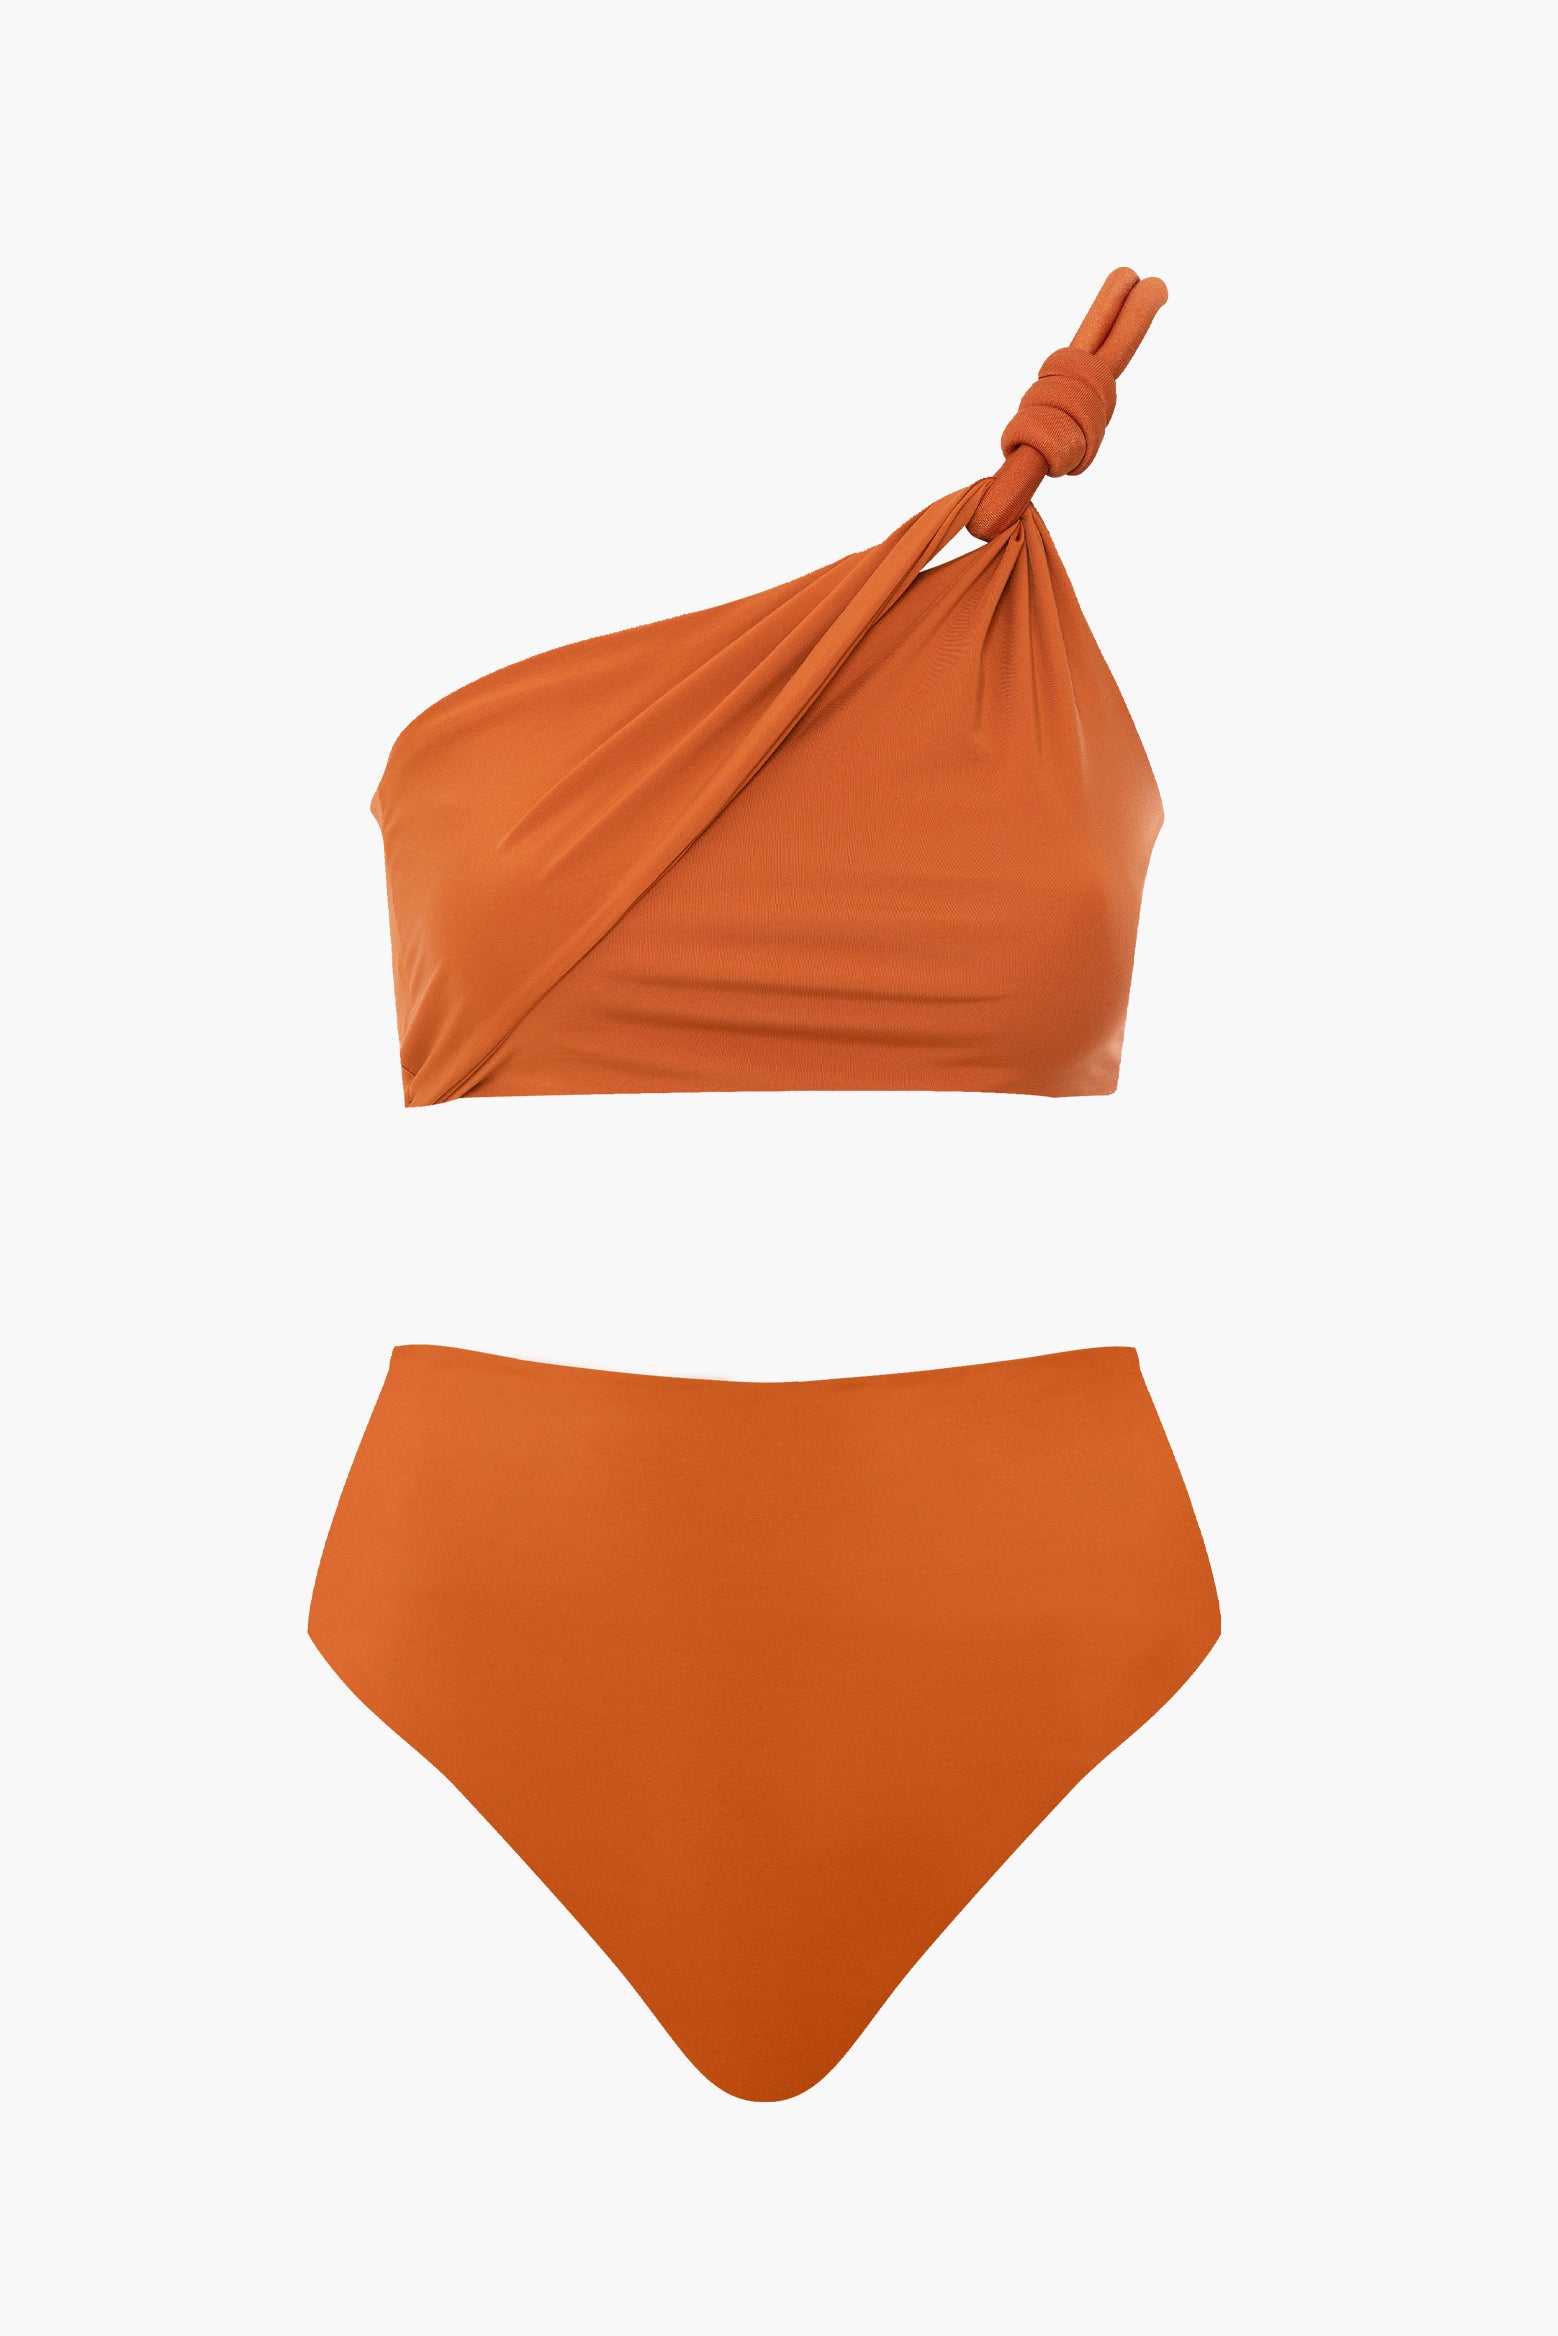 MAYGEL CORONEL Islote Bikini in Orange Ochre | The New Trend